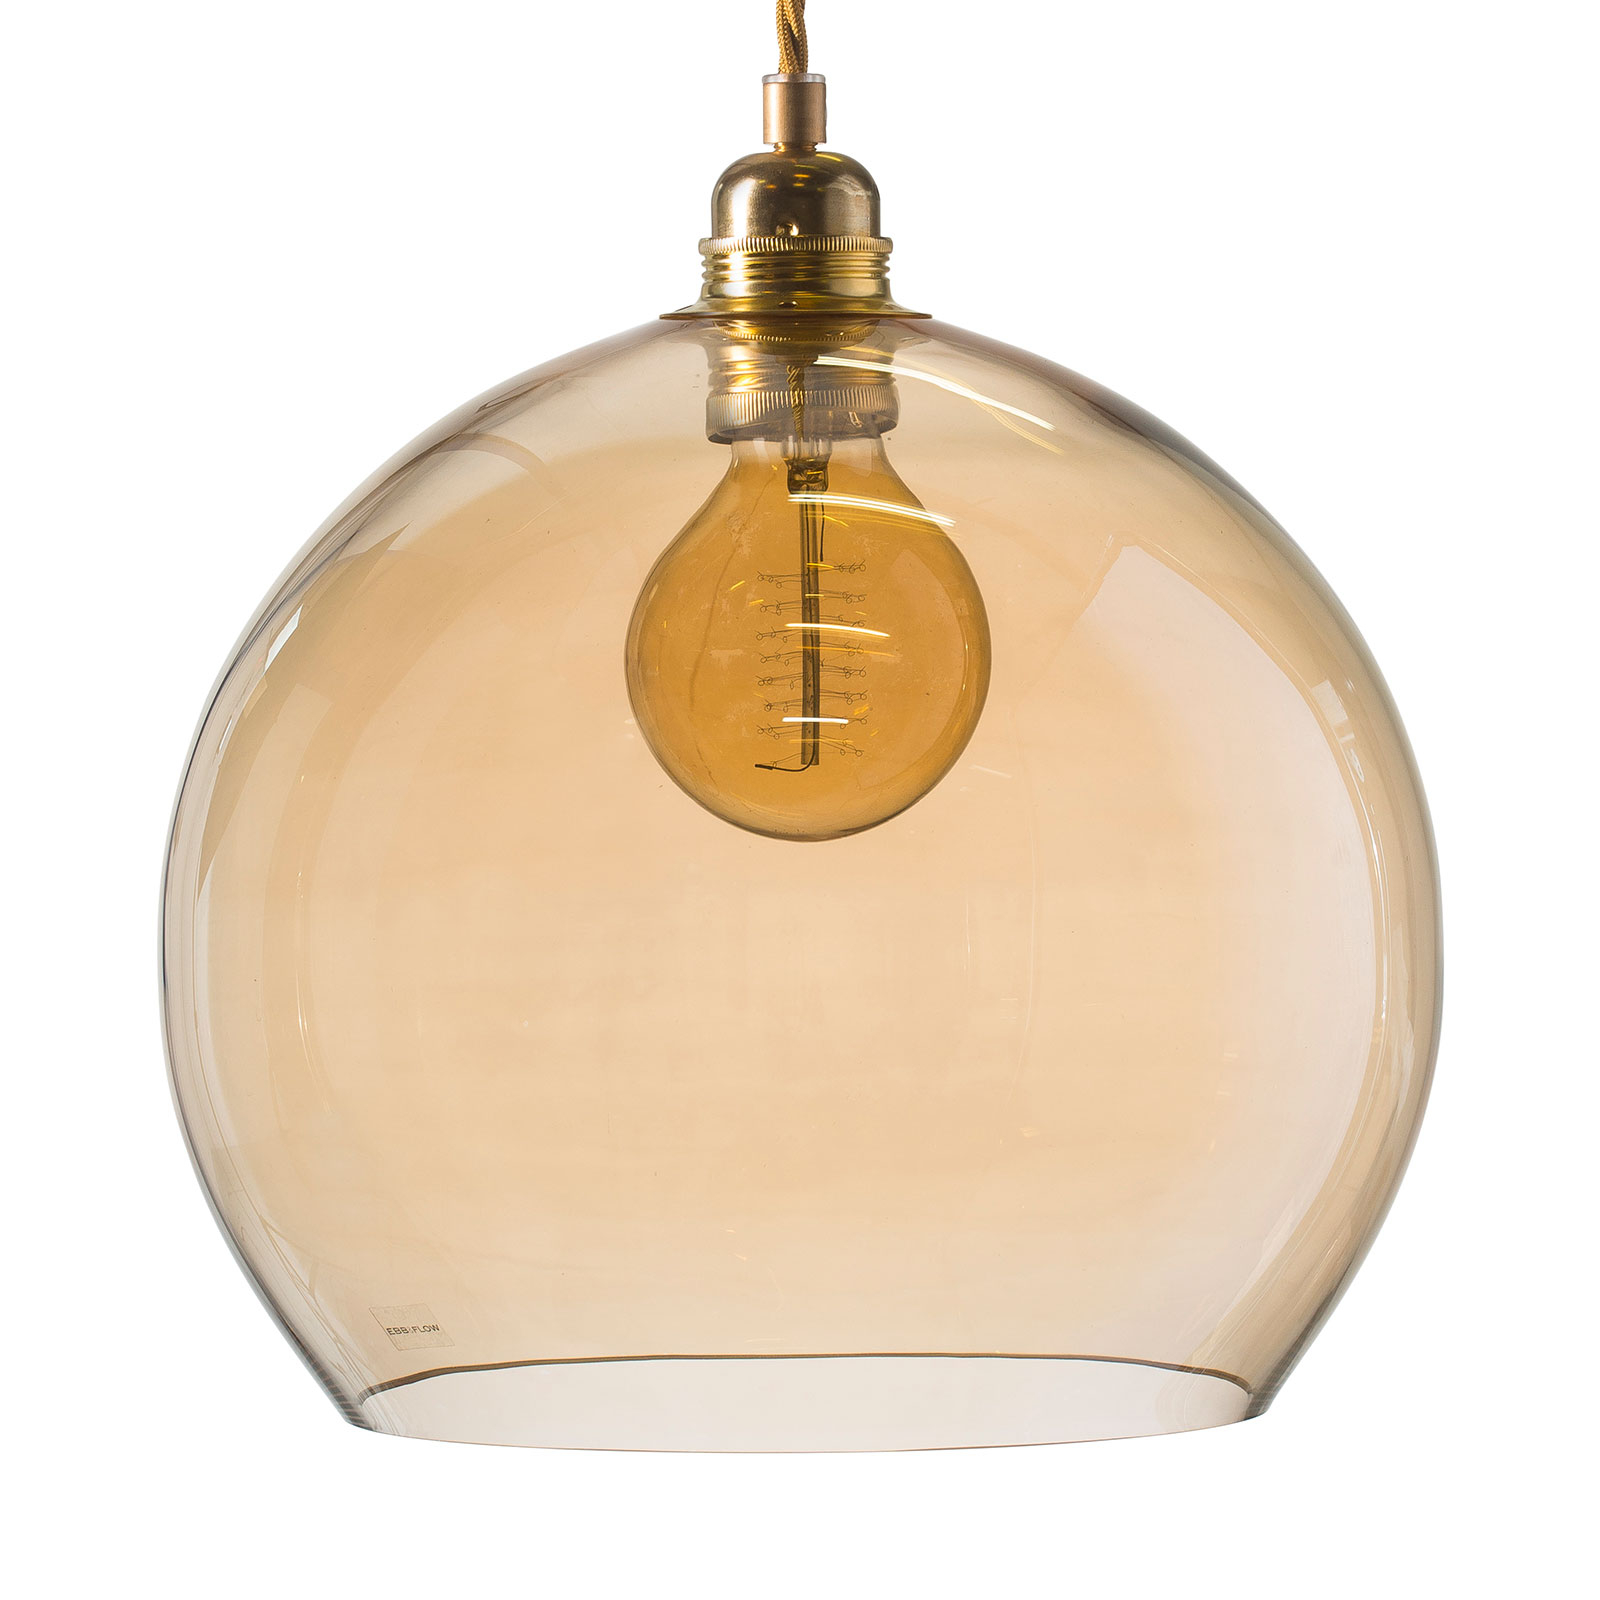 EBB & FLOW Rowan hanglamp goud/goud-rook Ø 28cm